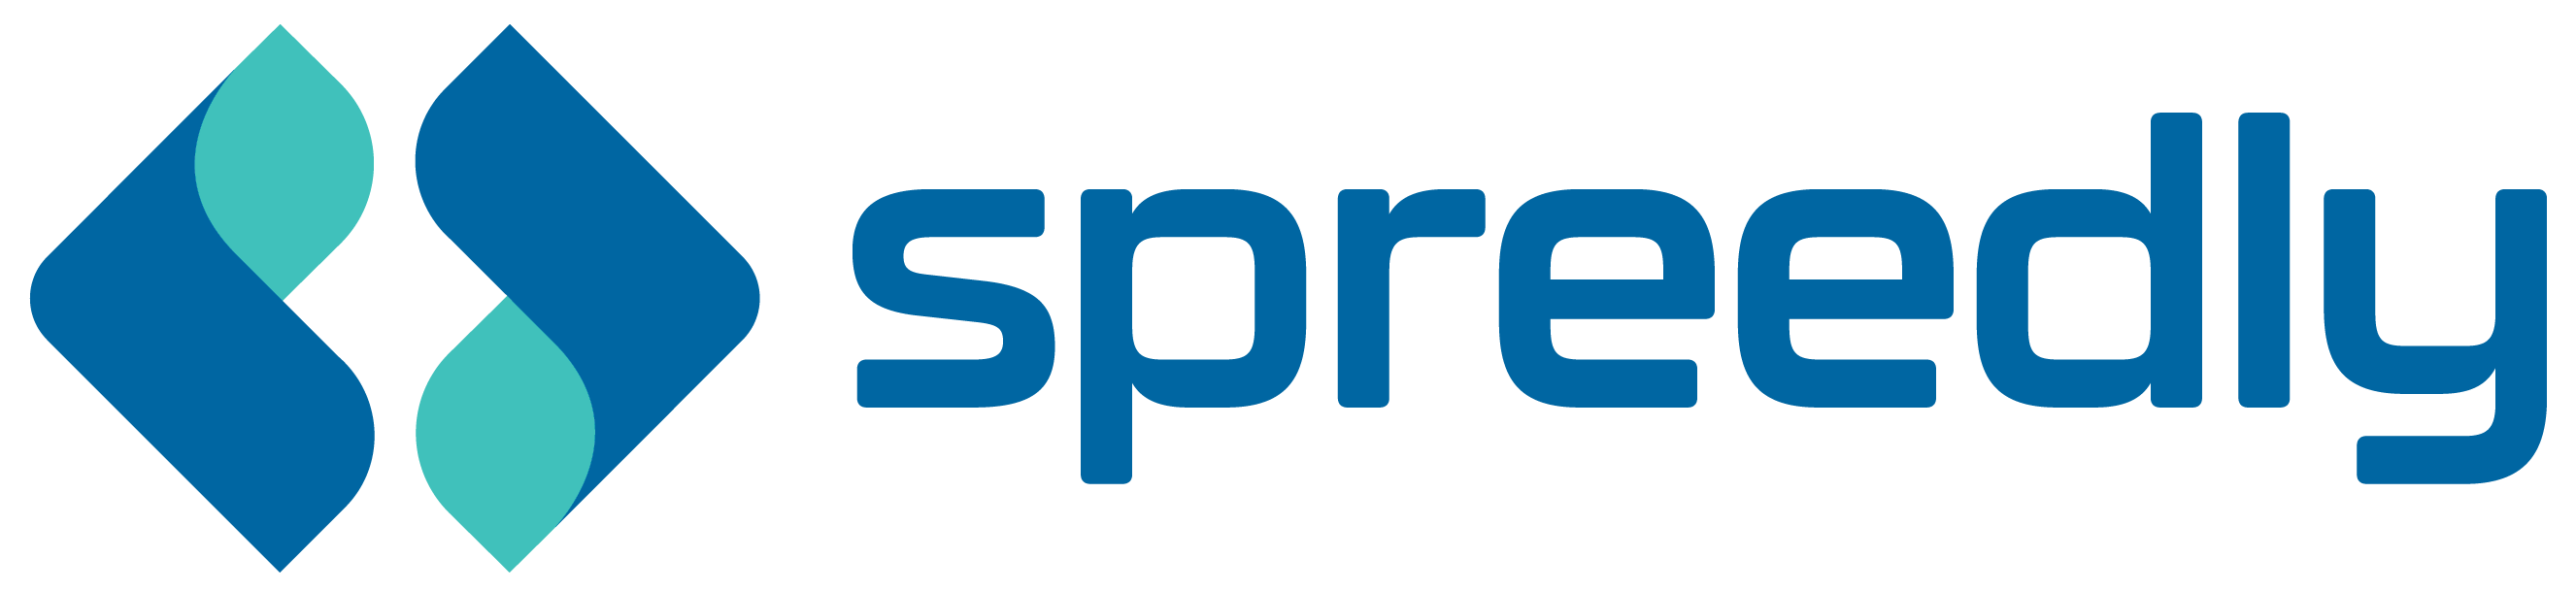 Spreedly logo